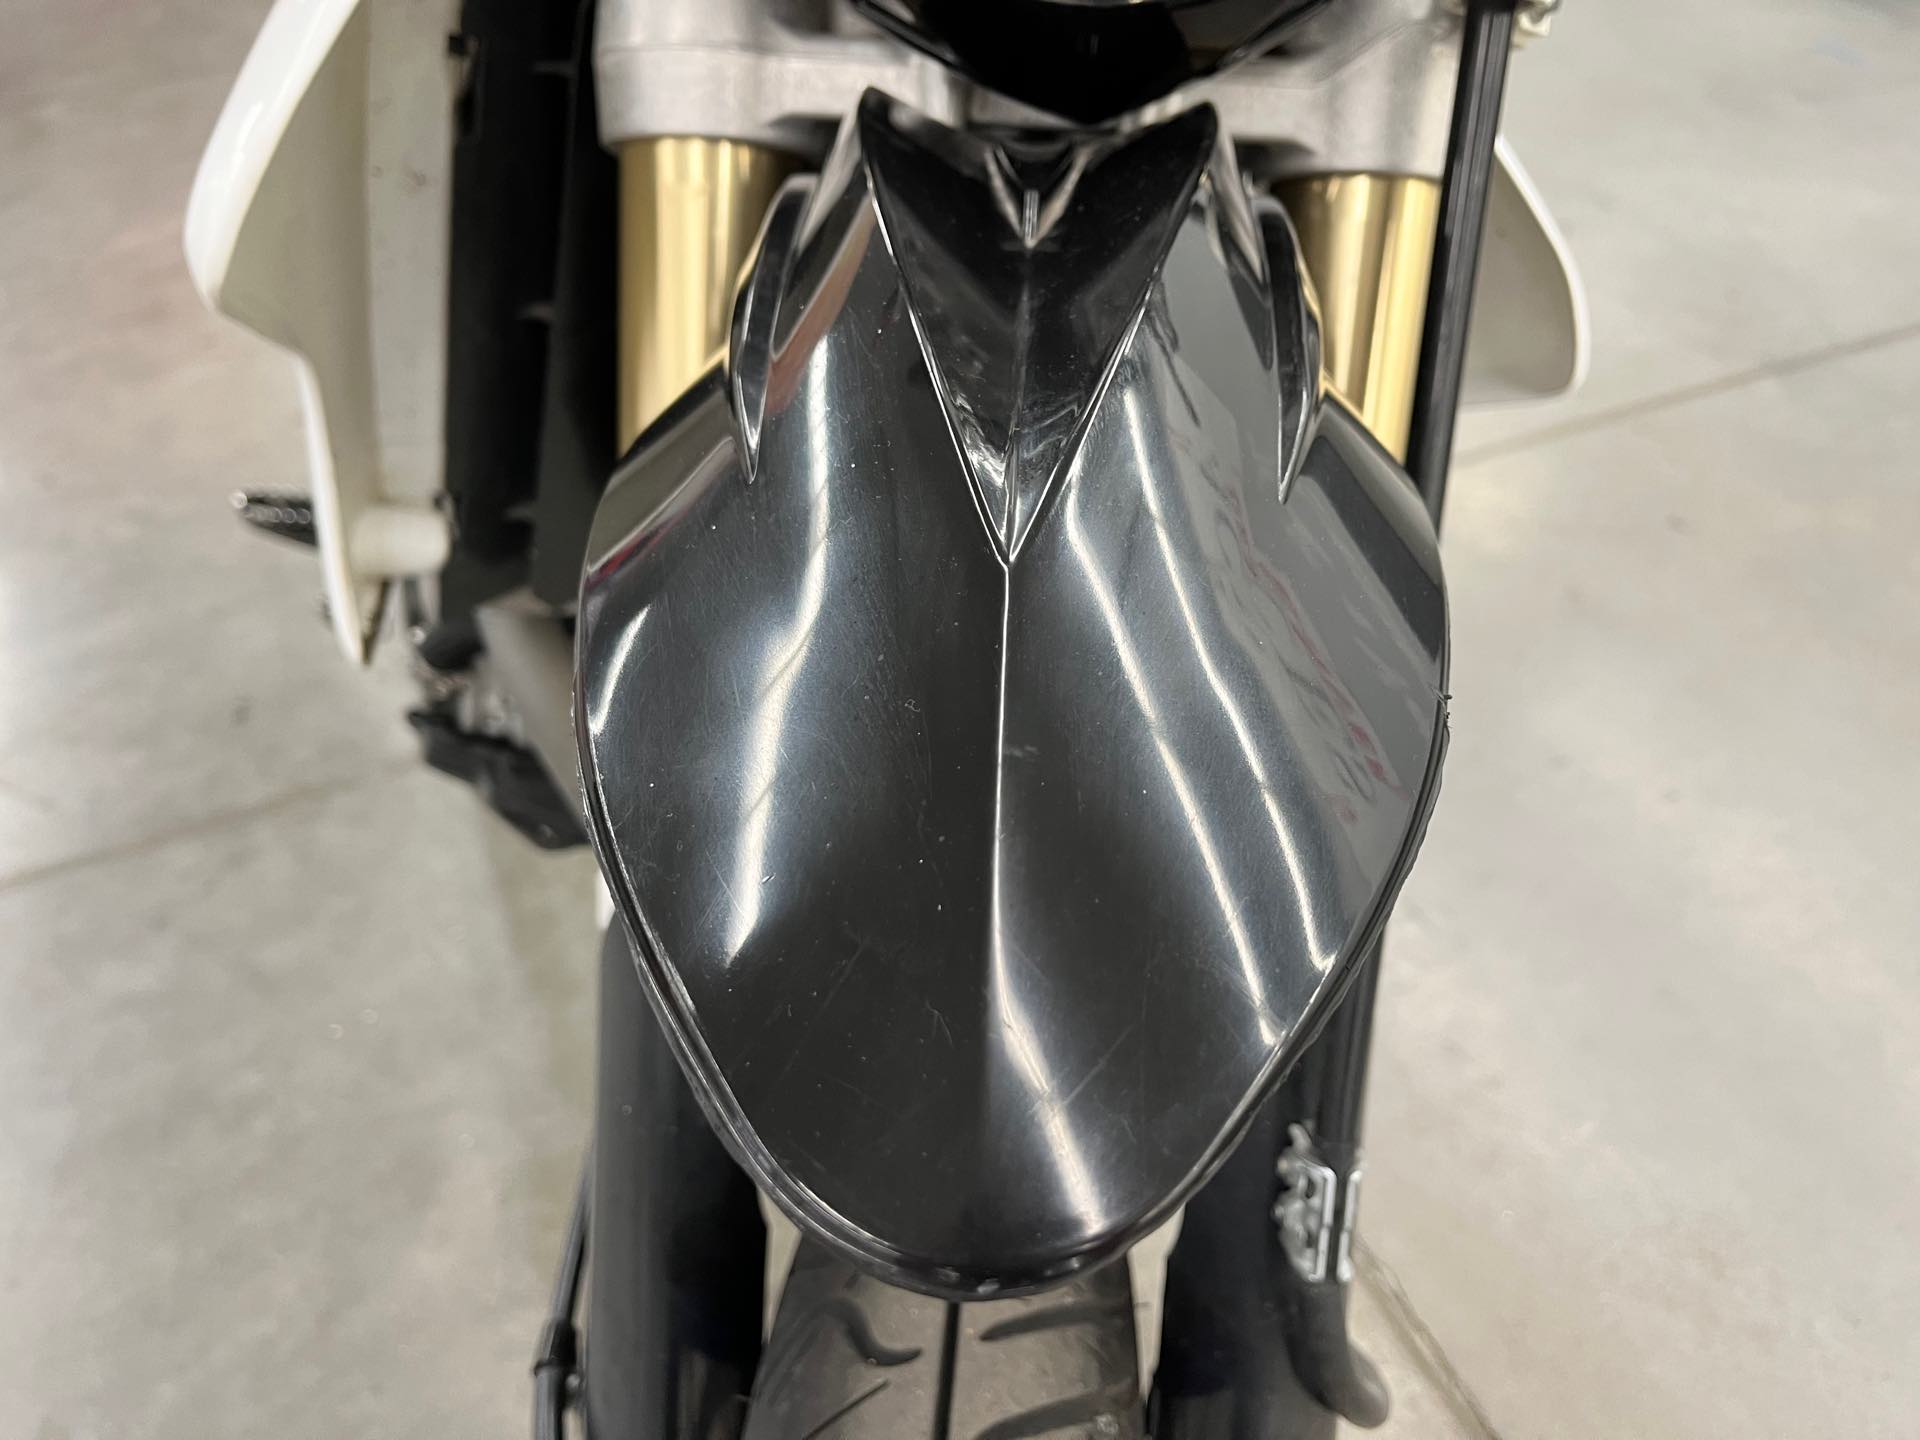 2013 Suzuki DR-Z 400SM Base at Aces Motorcycles - Denver